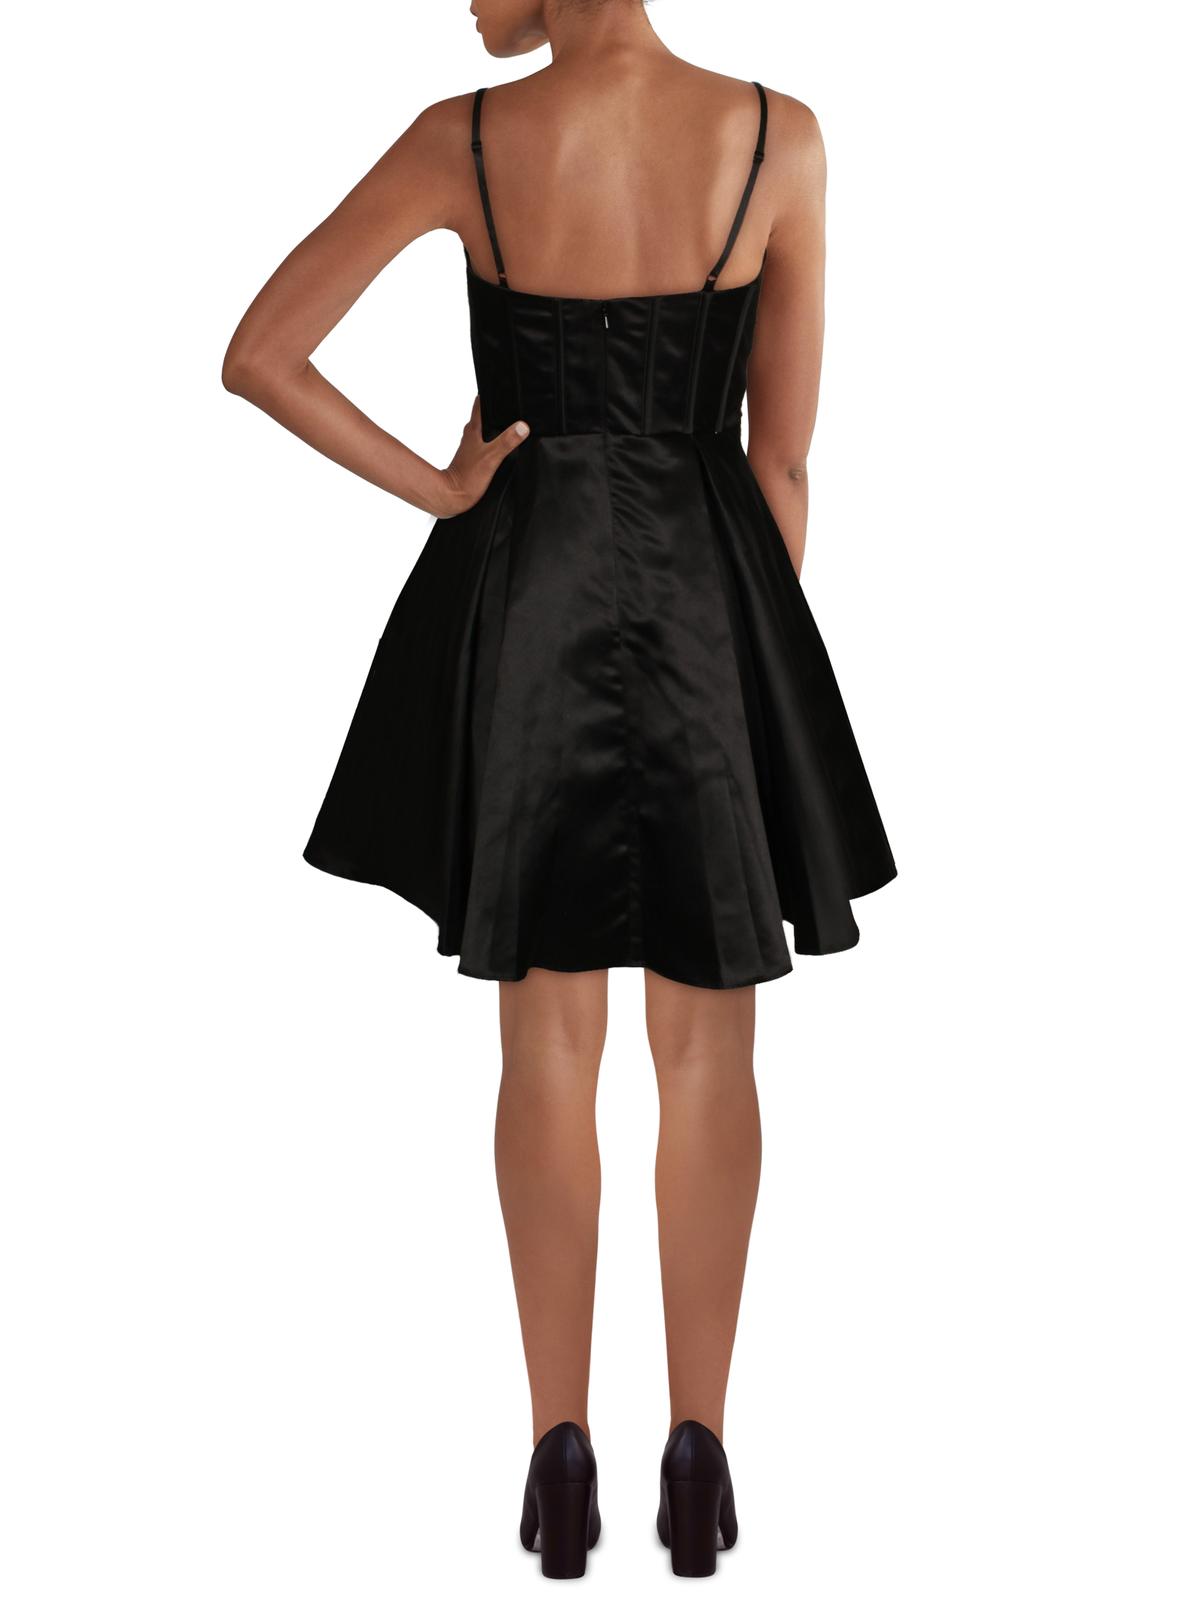 Blondie Nites Women's Embellished Corset Fit & Flare Dress Black Size 5